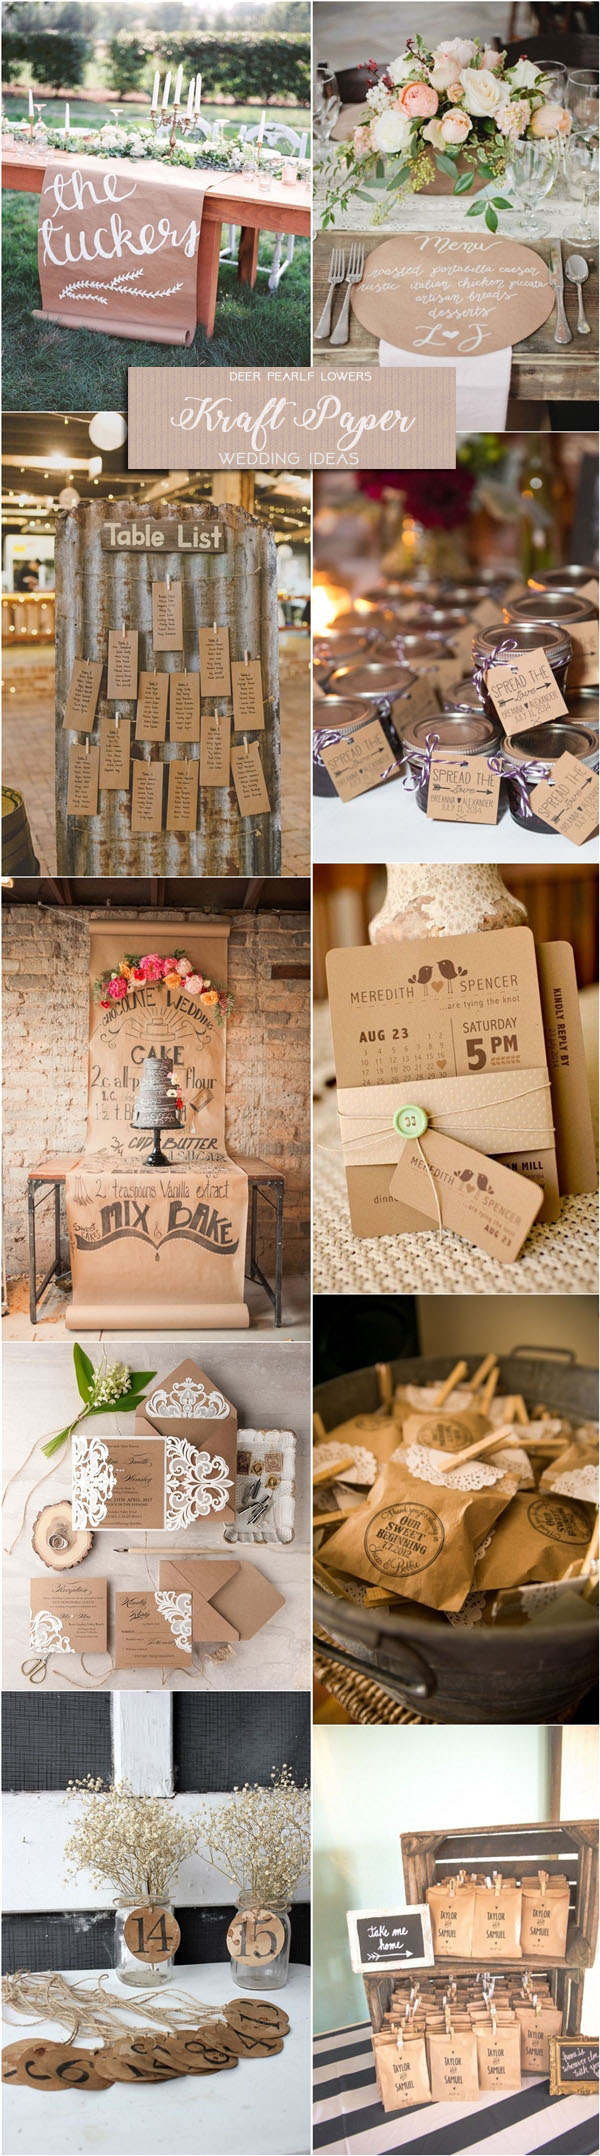 Rustic country wedding ideas - kraft paper wedding invitations & decor ideas